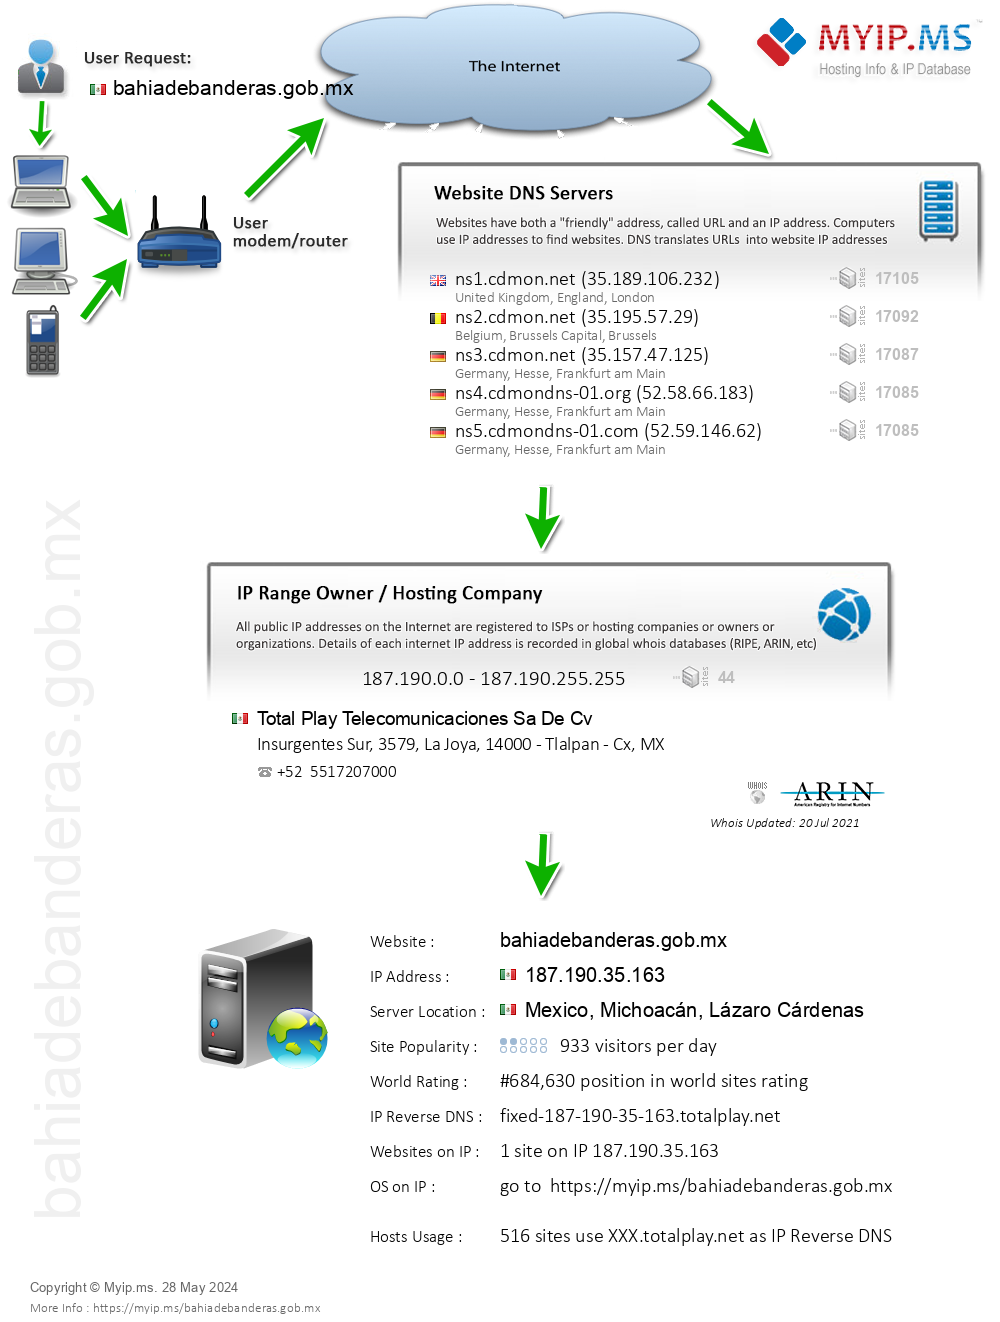 Bahiadebanderas.gob.mx - Website Hosting Visual IP Diagram